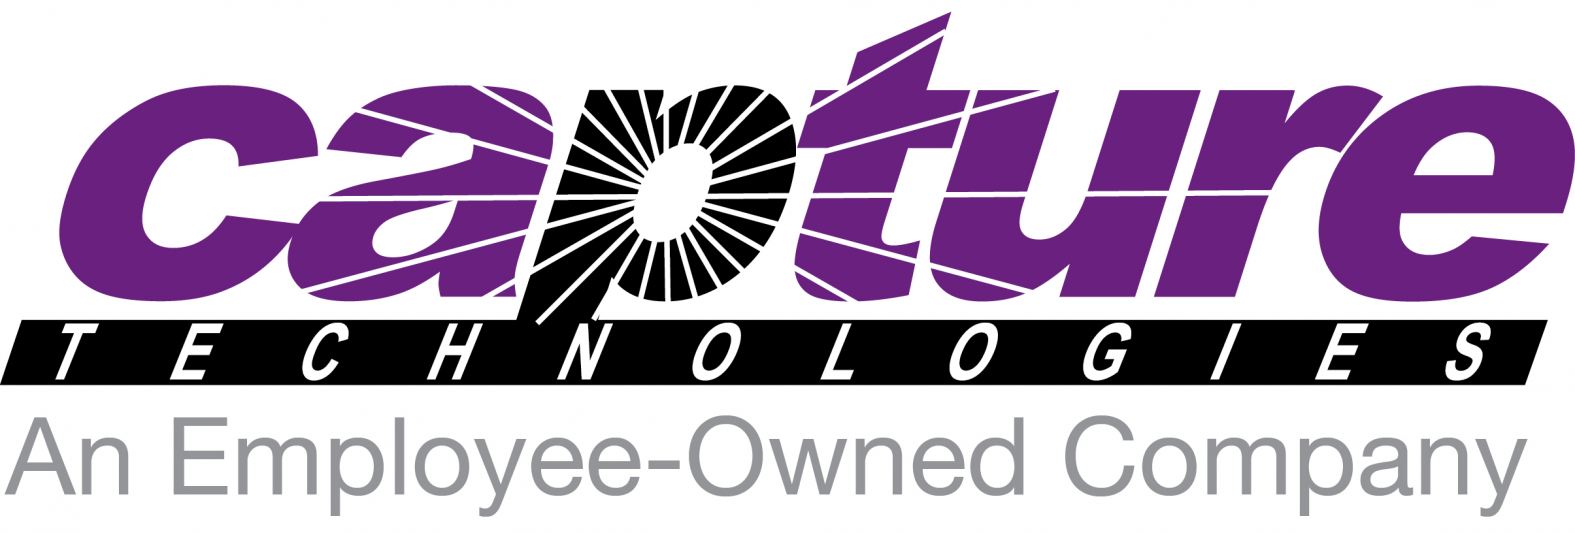 Capture Technologies Logo